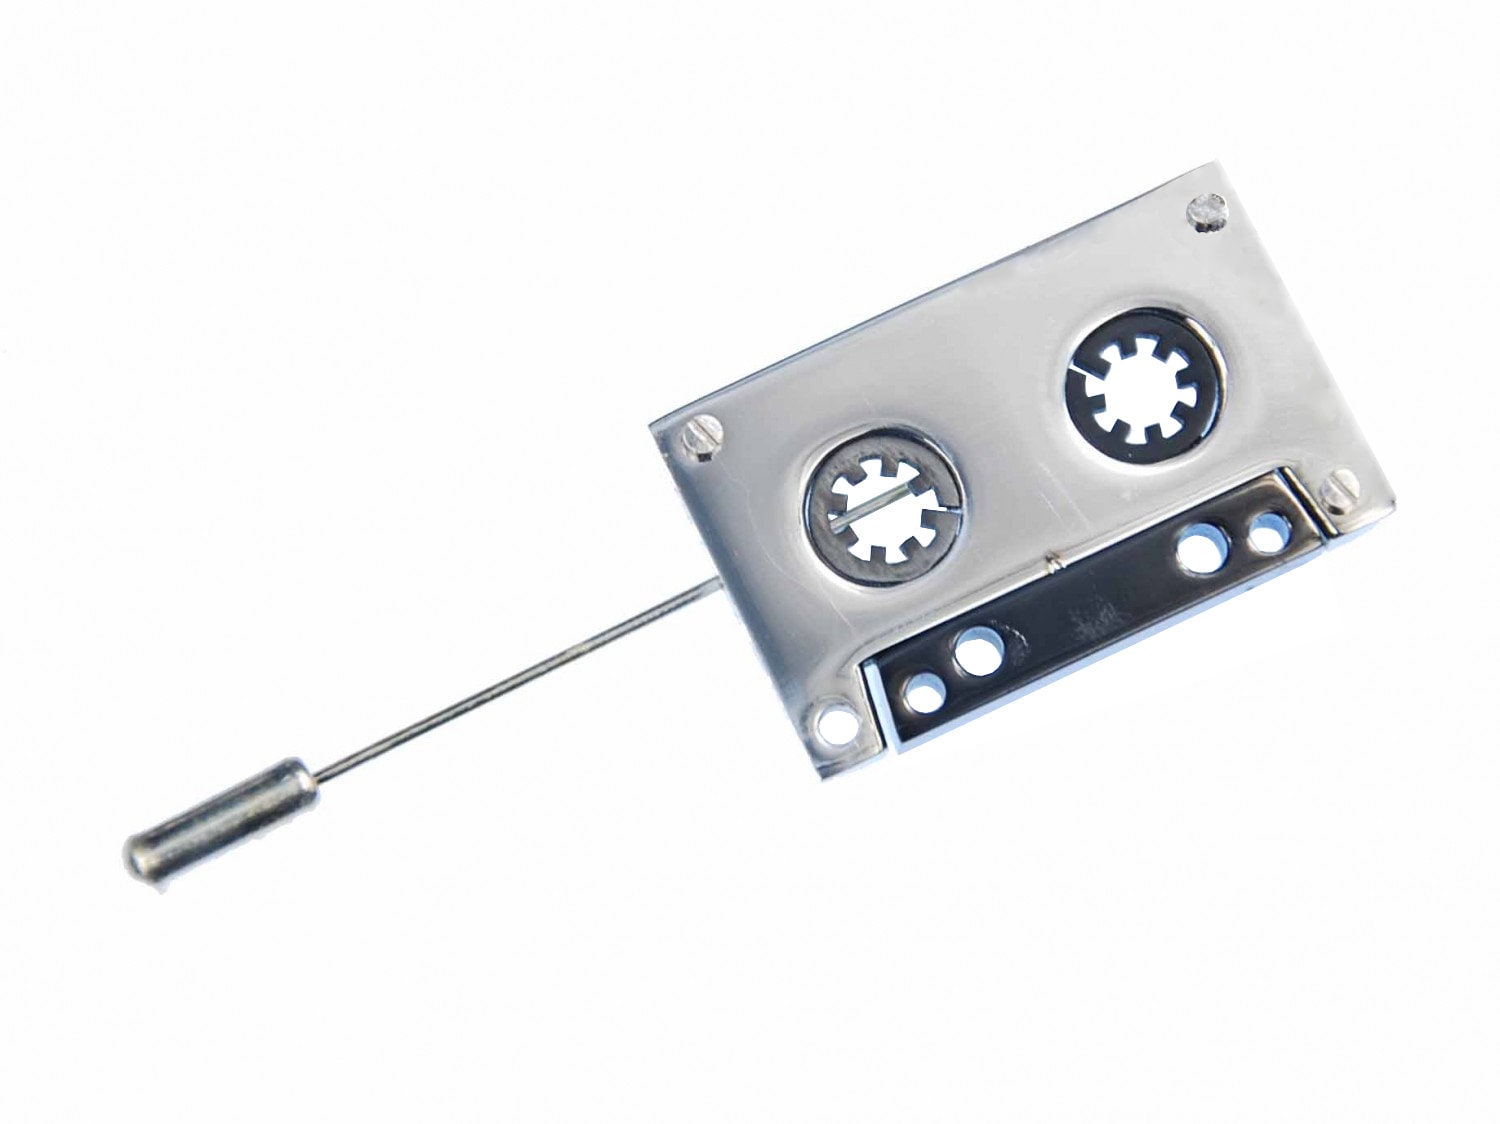 Kassette Krawattennadel Miniblings Anstecknadel Pin Anstecker Musik Silber Xlmc von Miniblings